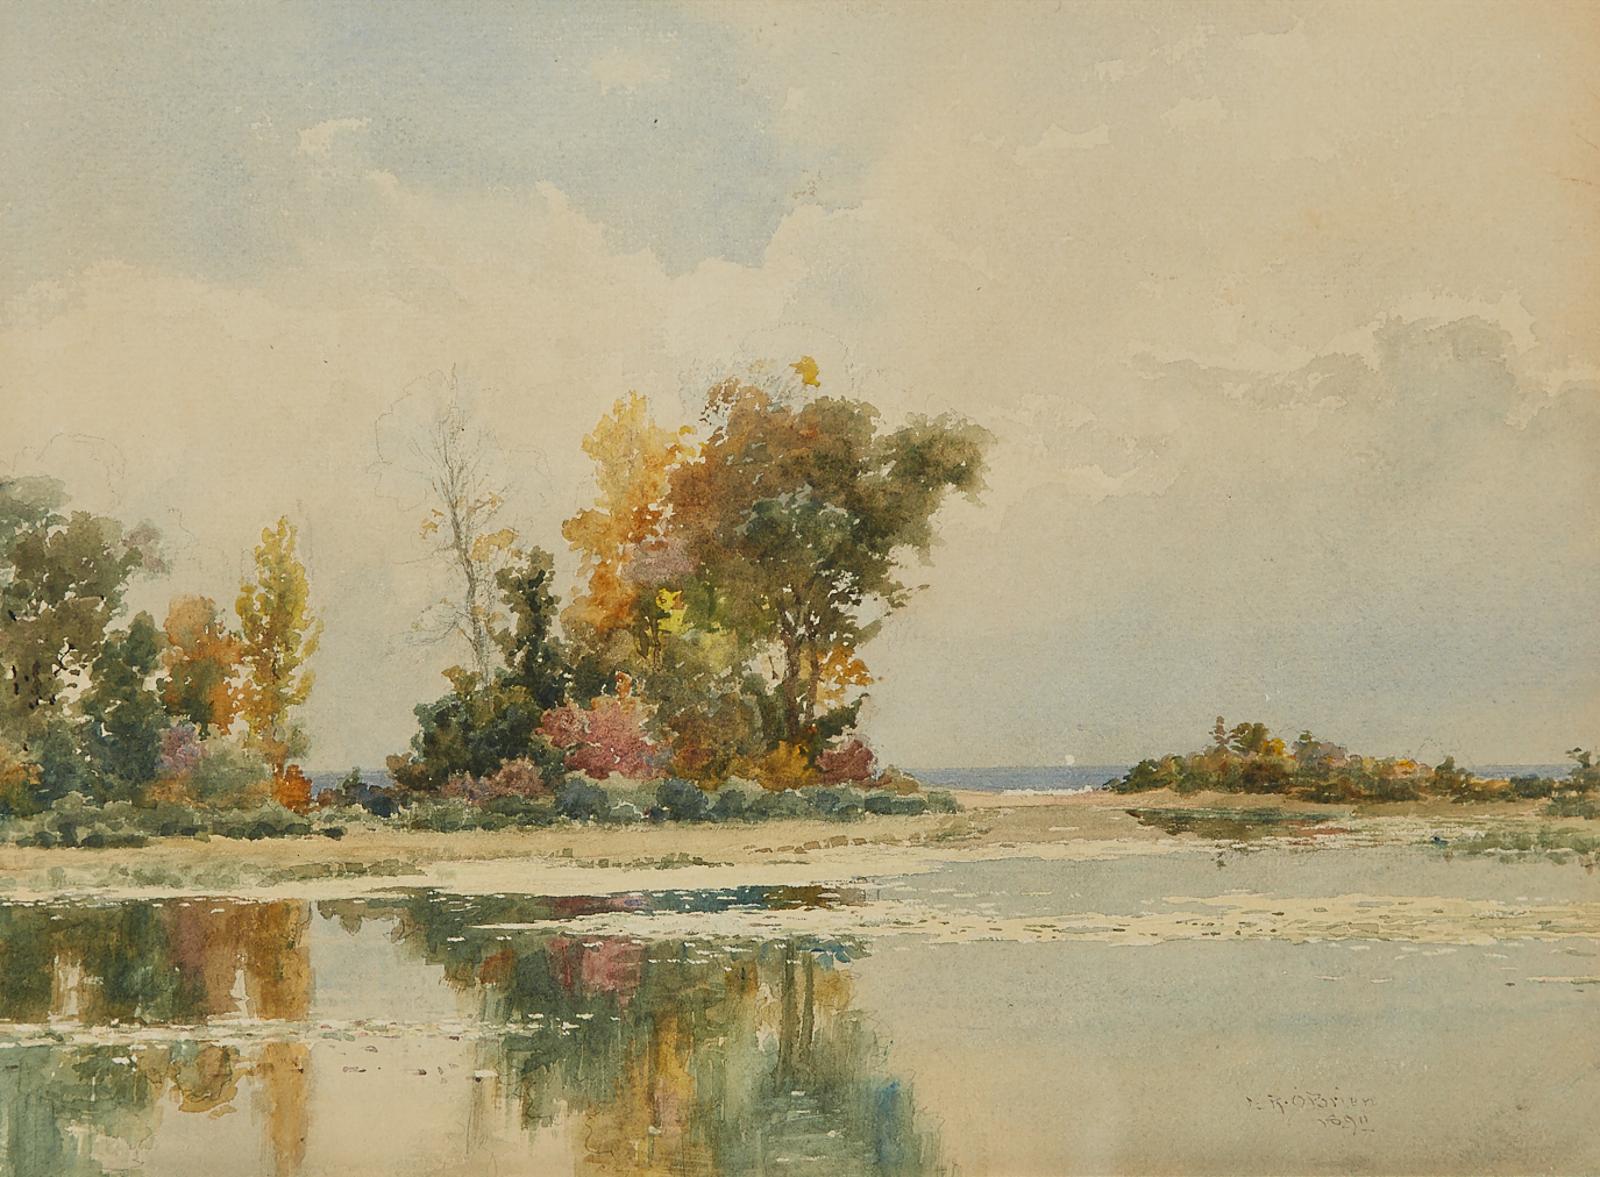 Lucius Richard O'Brien (1832-1899) - Reflections, Toronto Islands, 1890